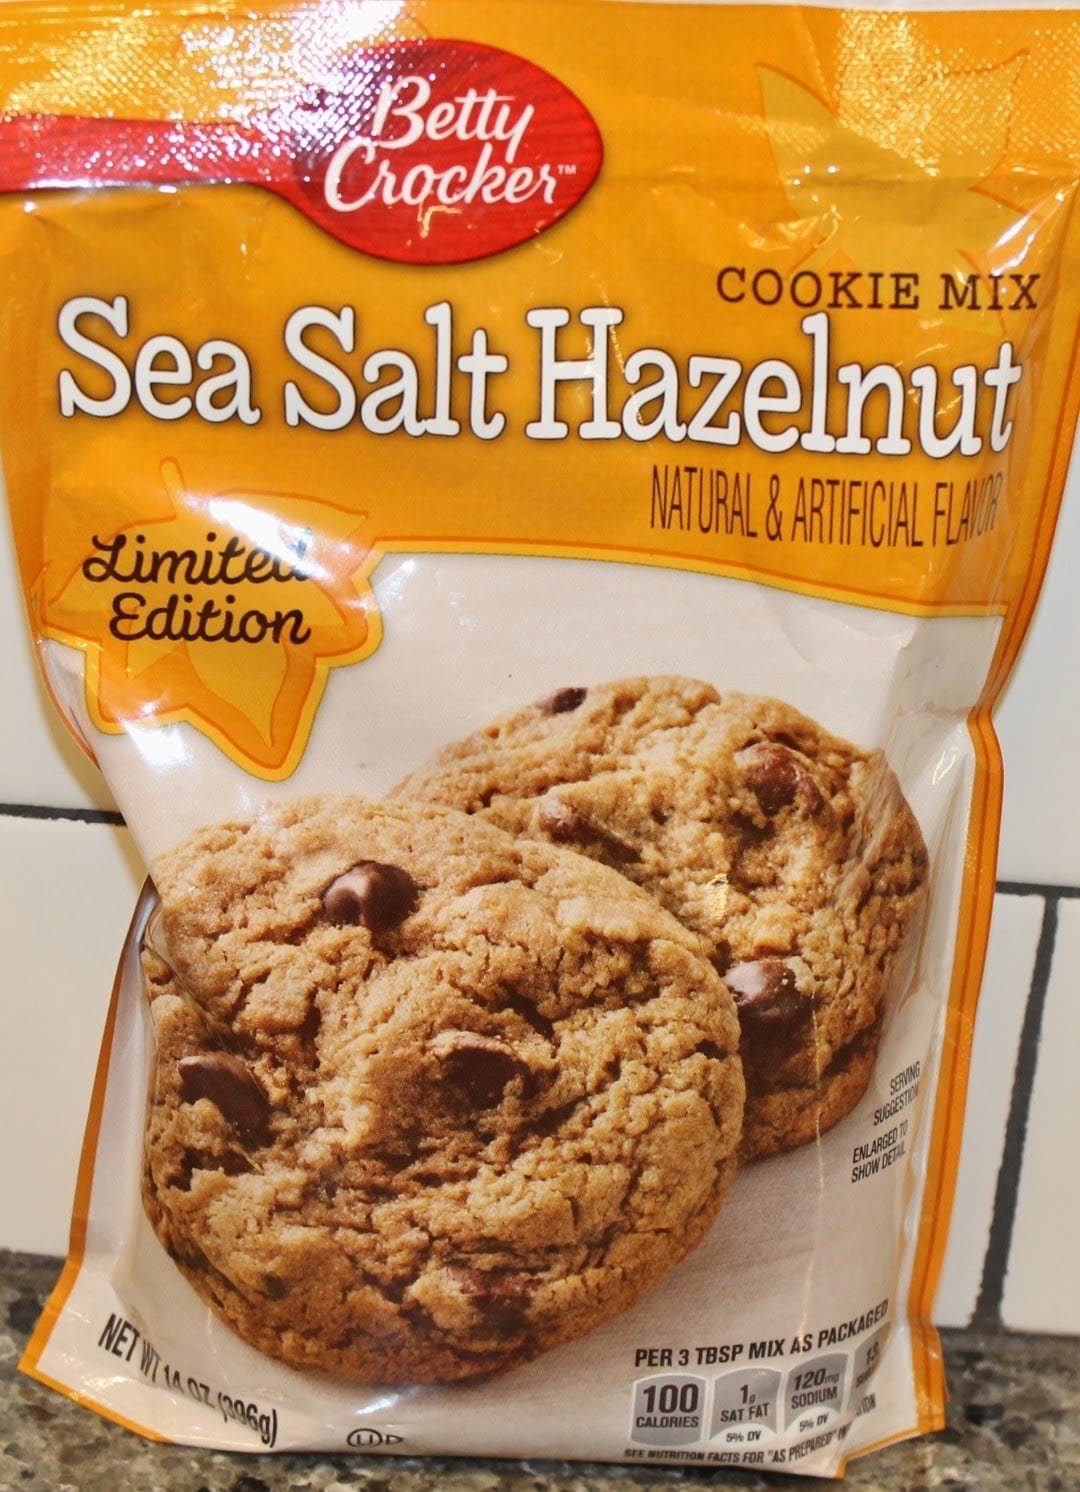 Betty Crocker Sea Salt Hazelnut Cookie Mix Preparation & Review